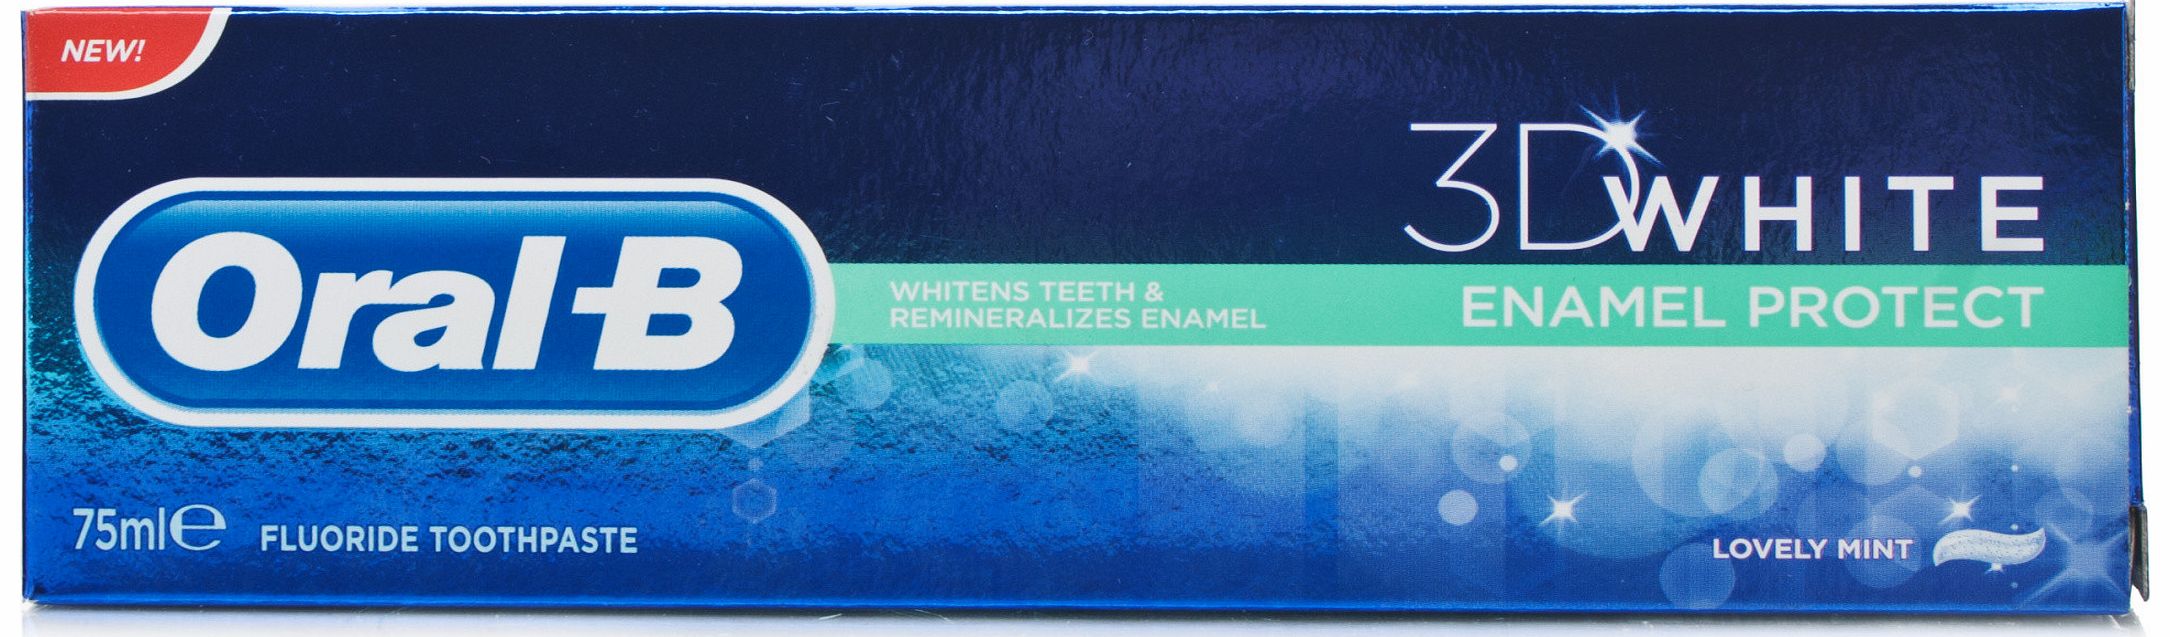 3D Whitening Enamel Protect Toothpaste